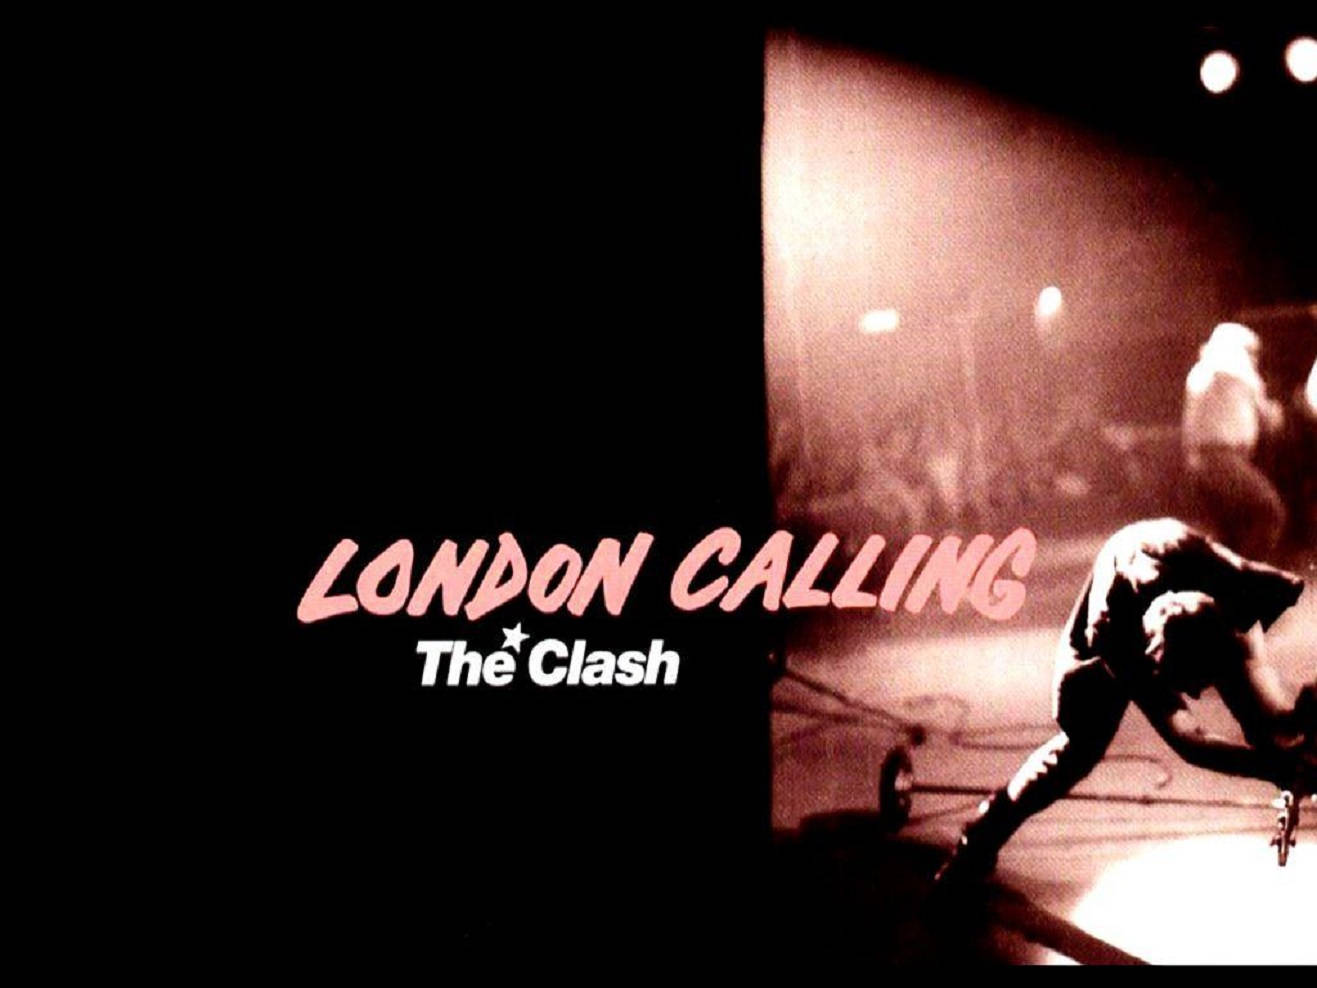 25th Anniversary Edition London Calling The Clash Wallpaper